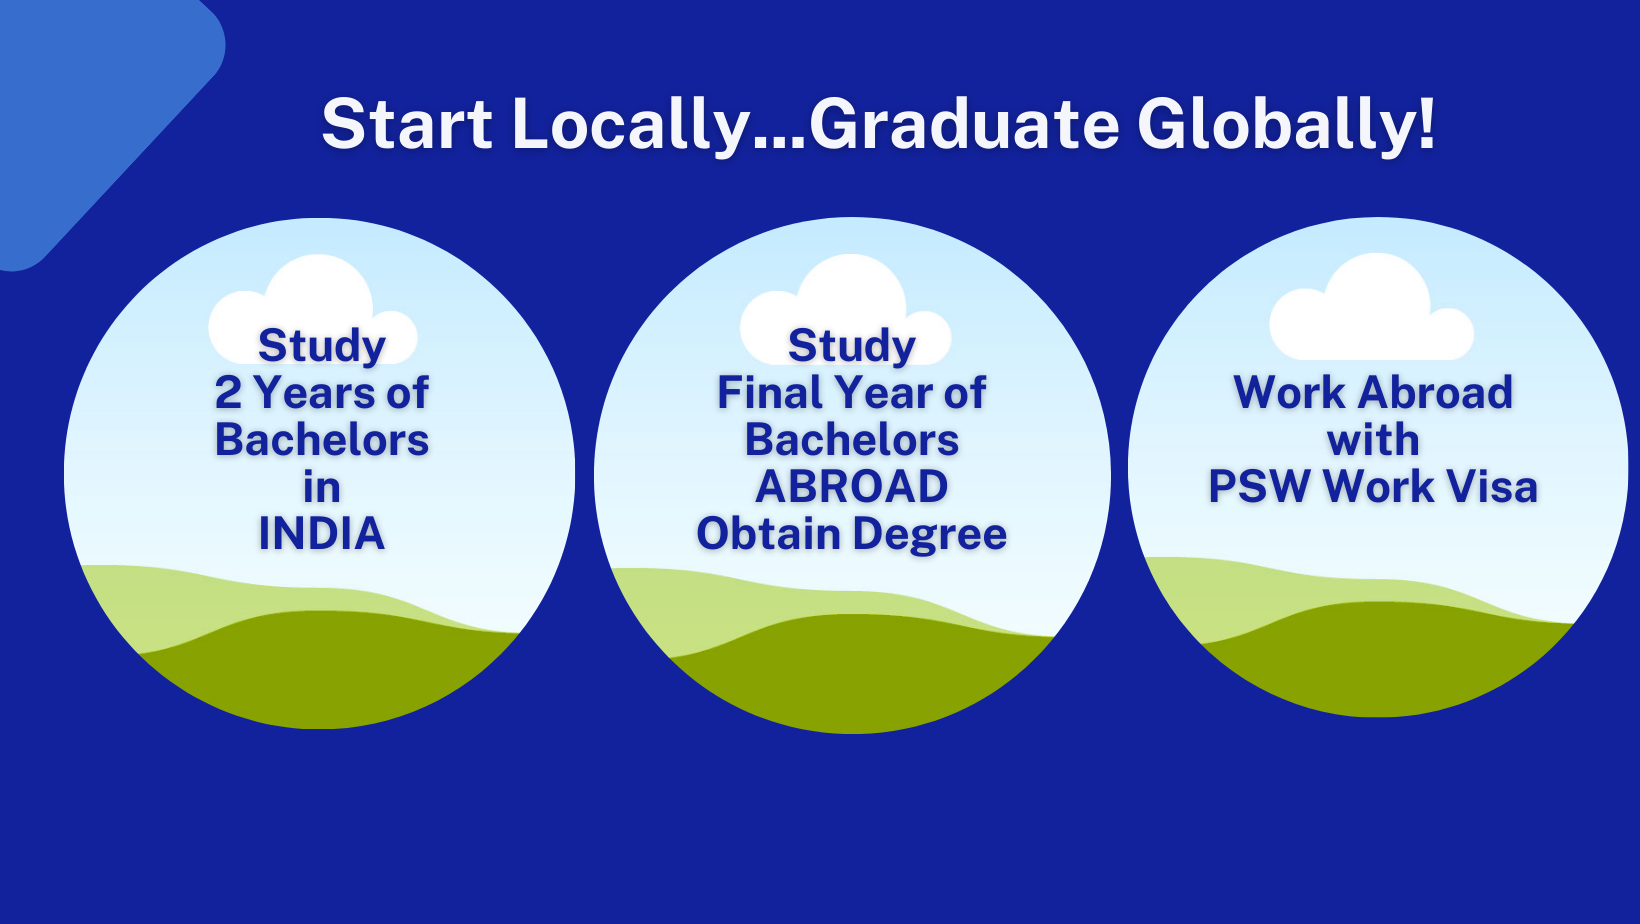 Start Locally...Graduate Globally! (1)